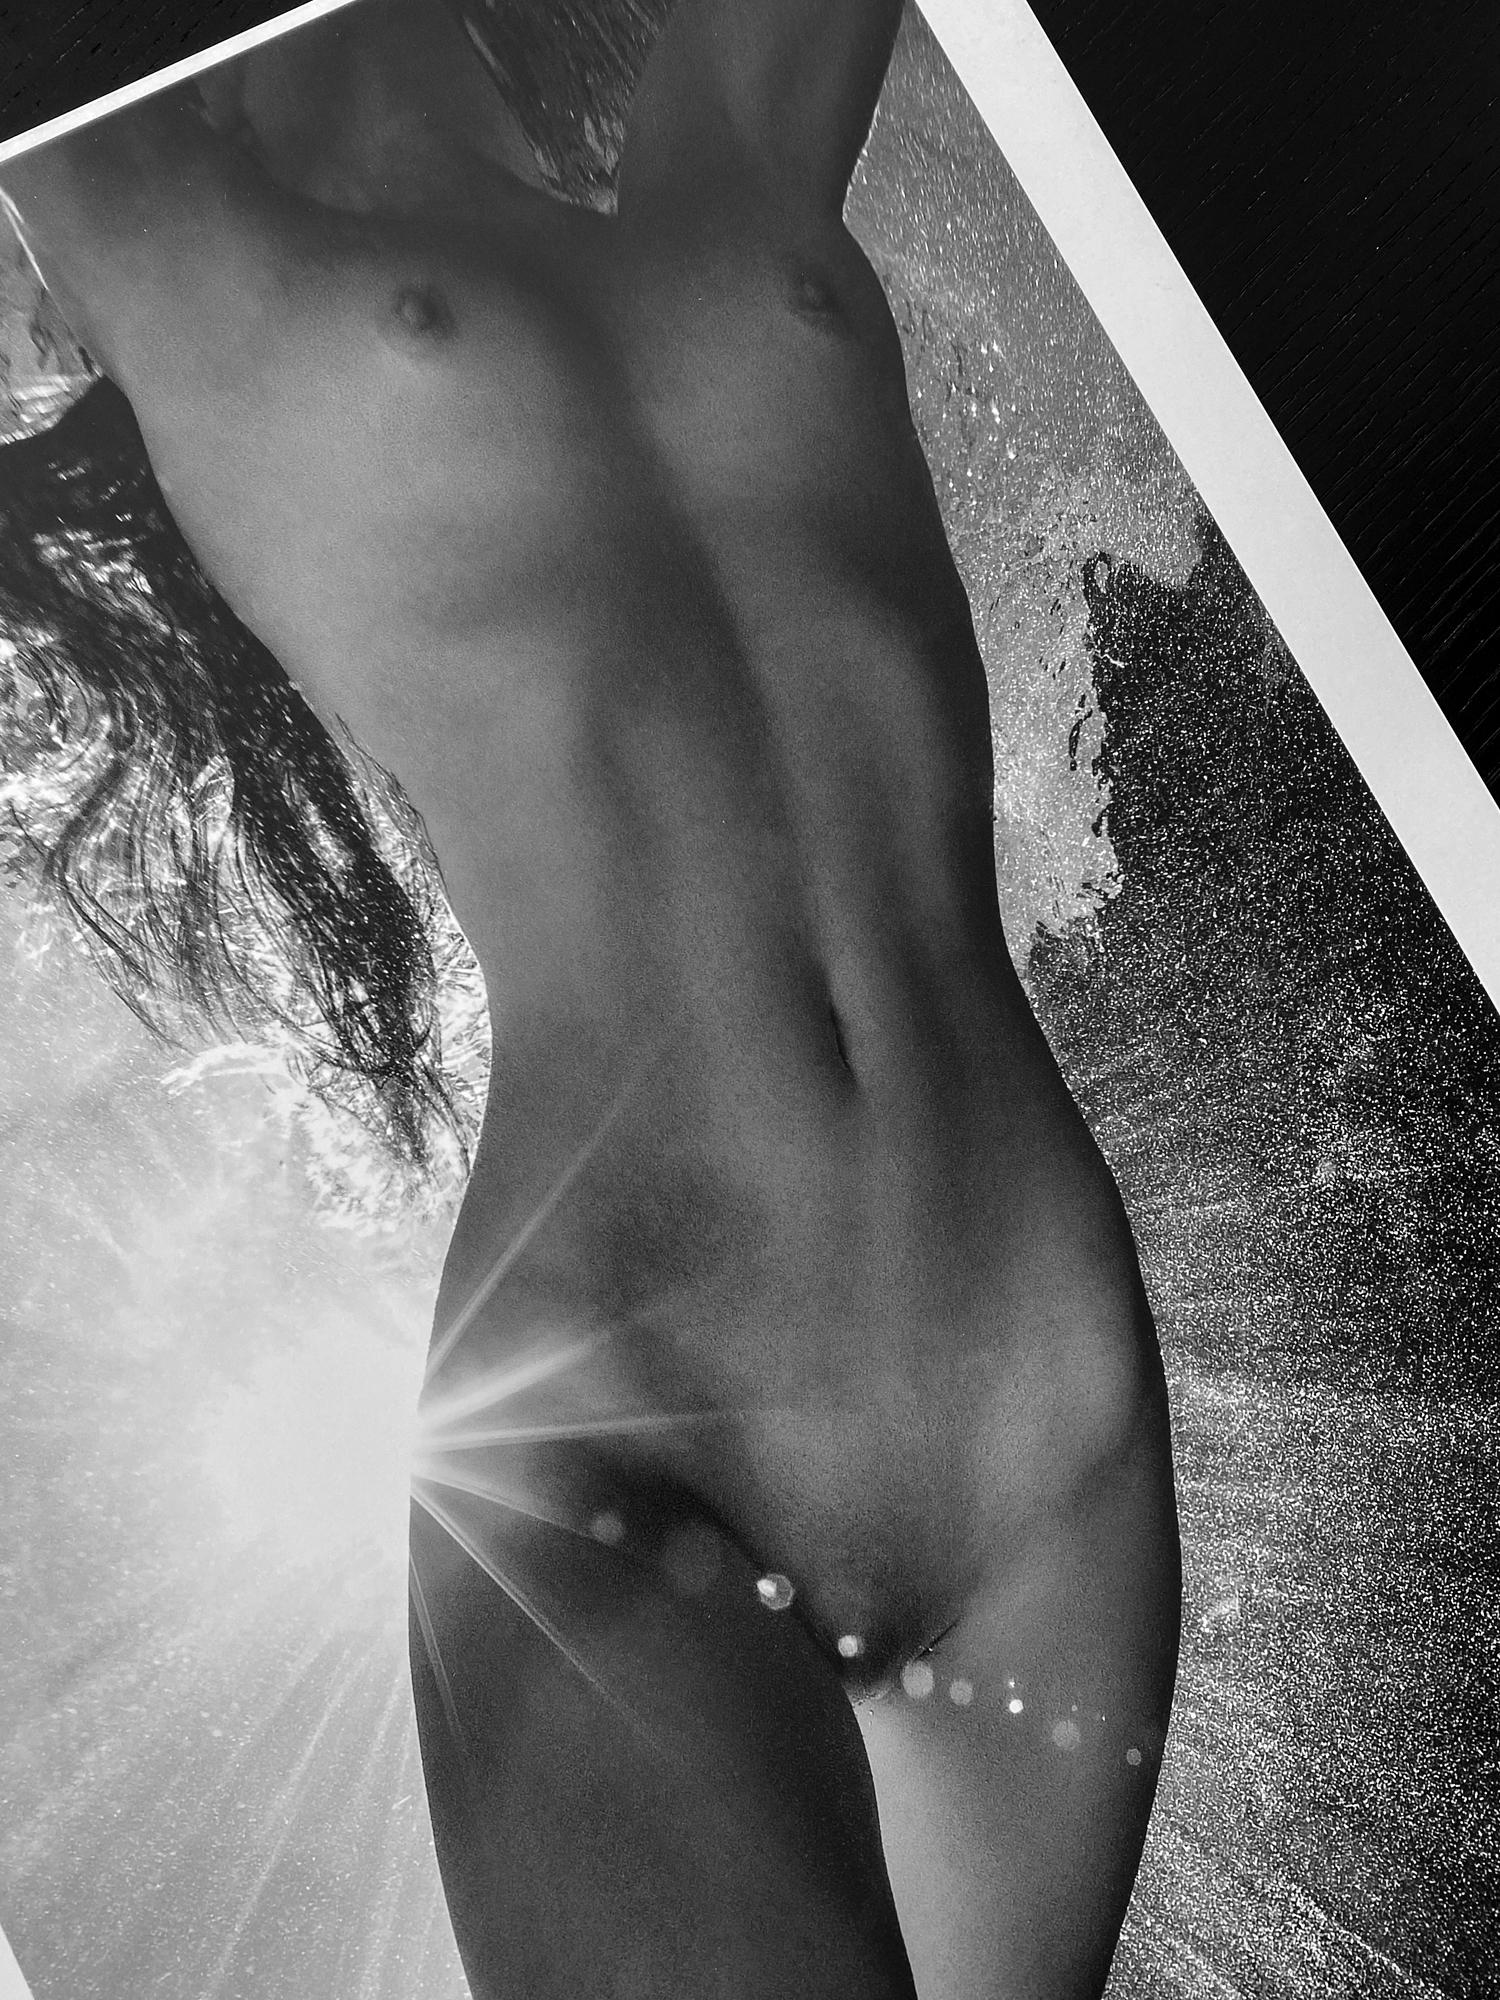 Sunbeams - underwater black & white photograph - print on paper 36